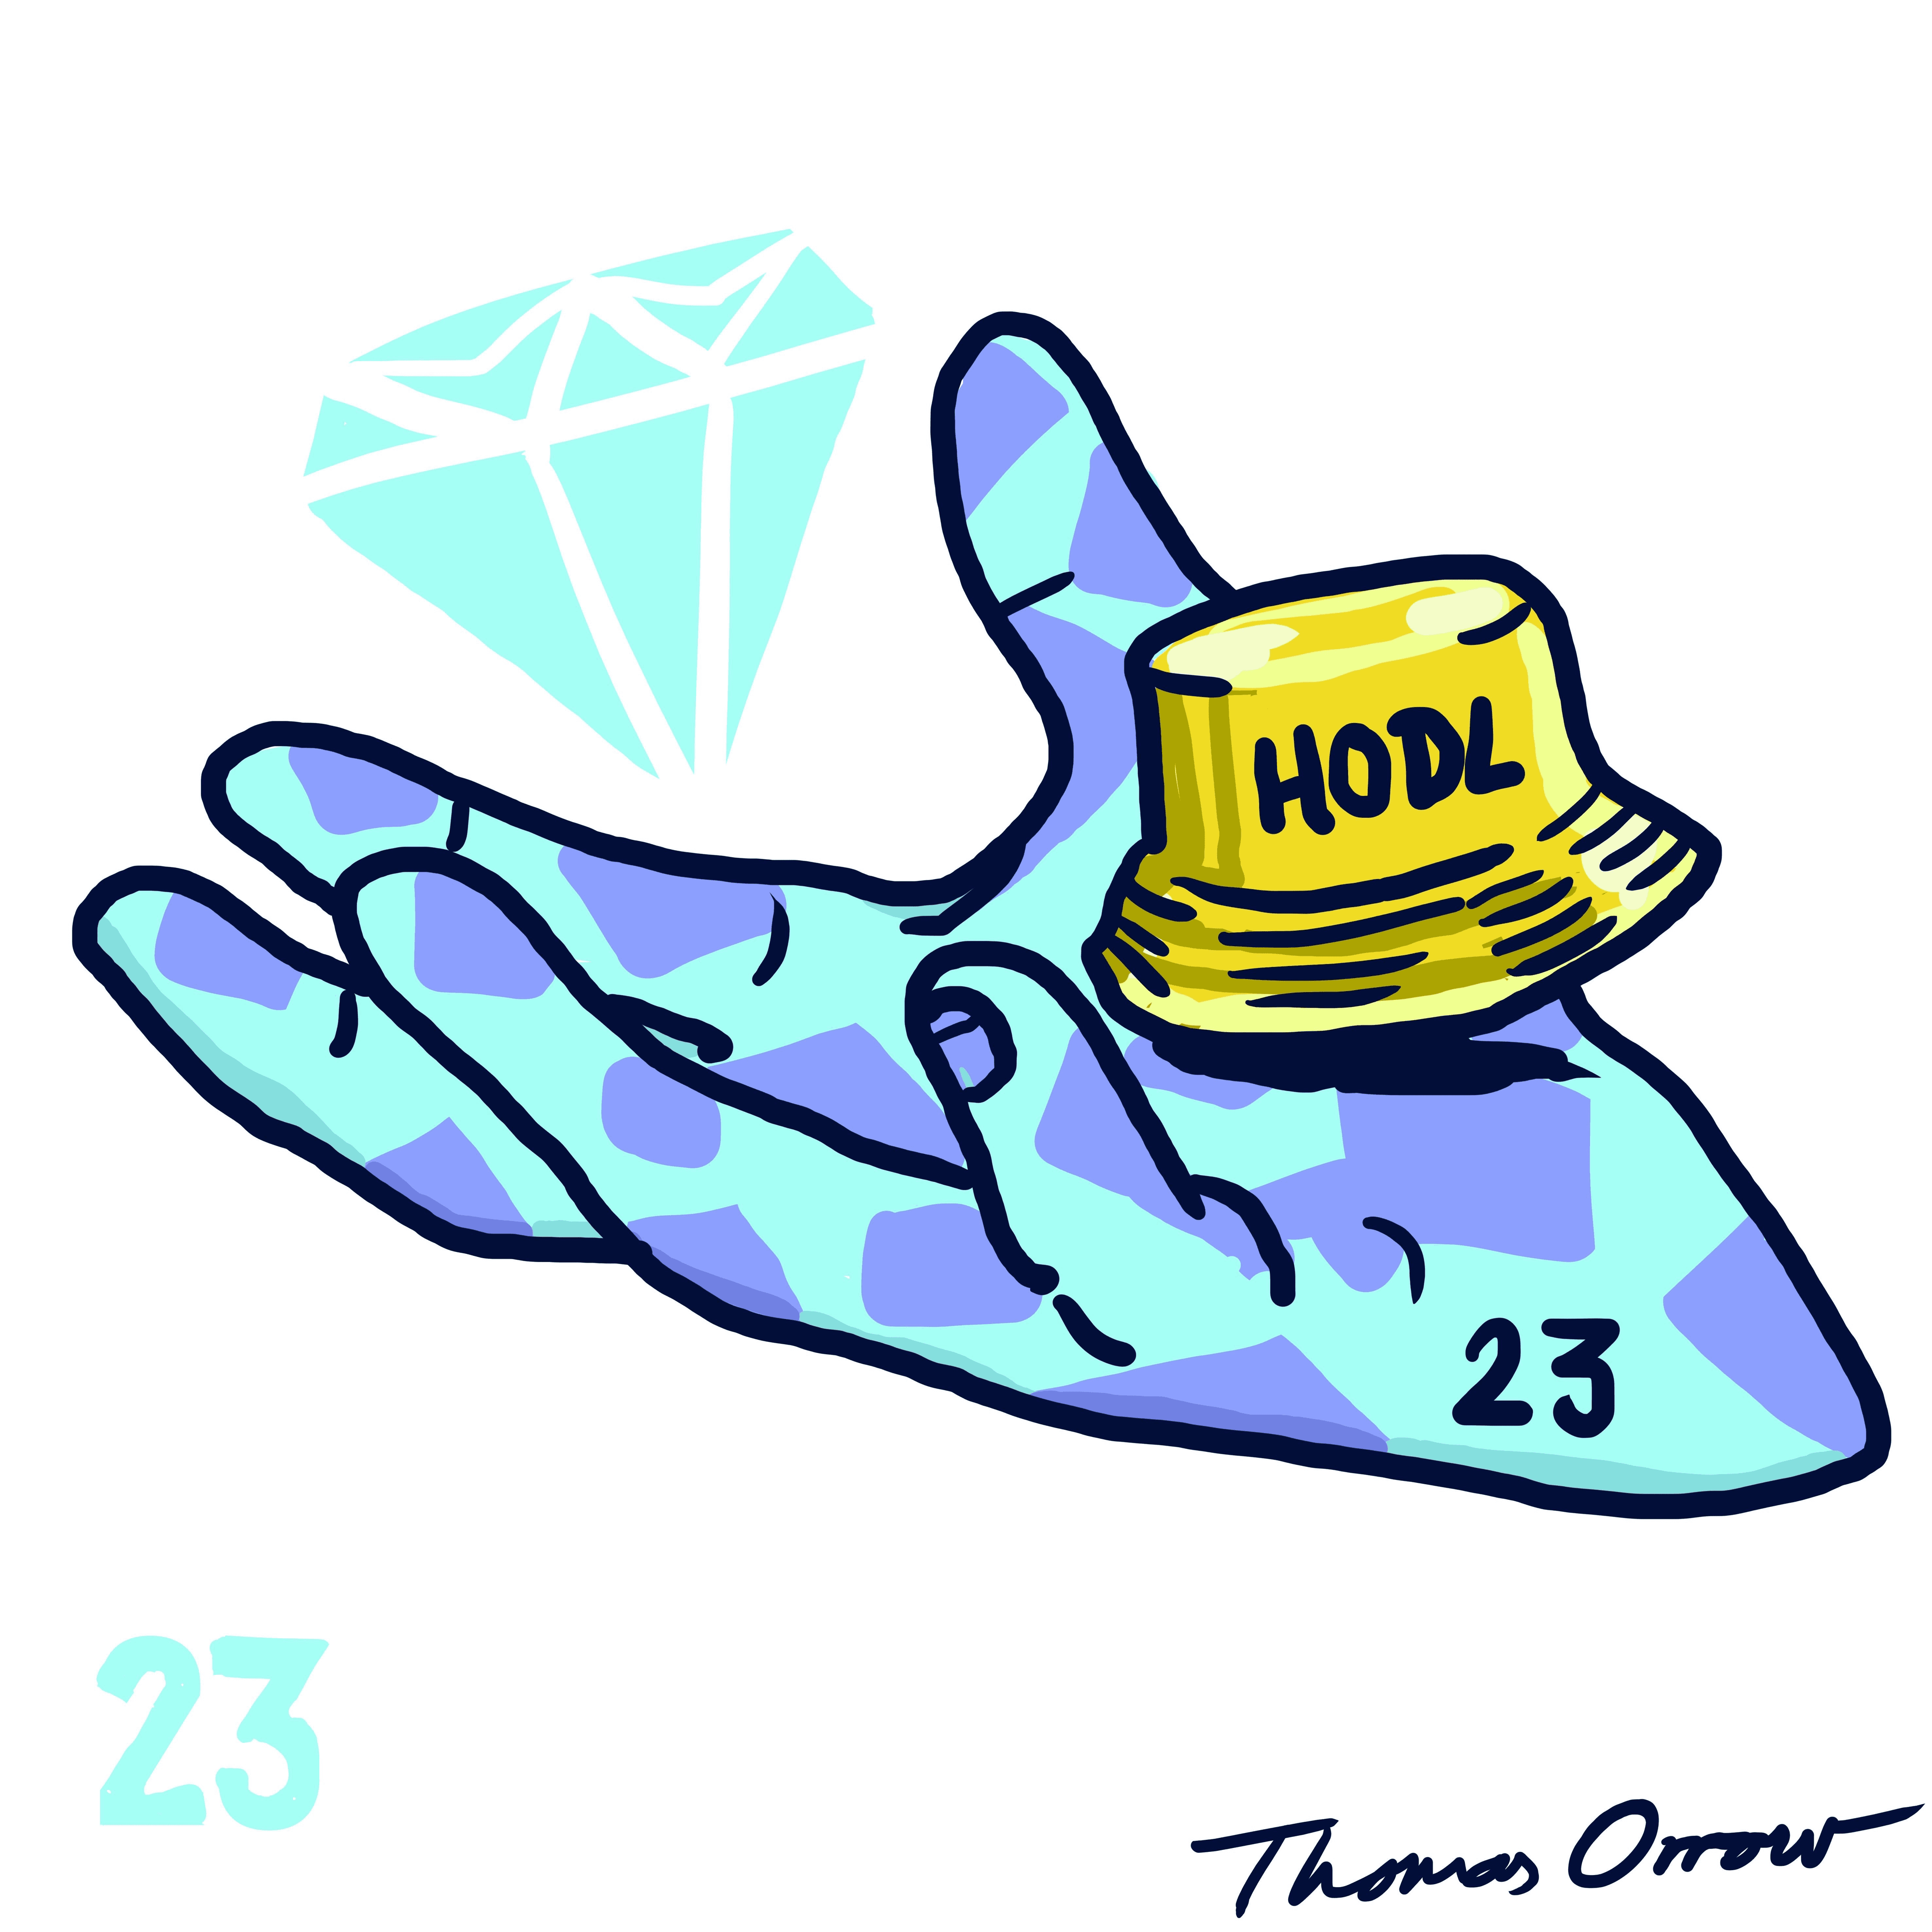 DIAMOND HAND HODLER – by u/Puzzeheaded_Popup (BONUS)